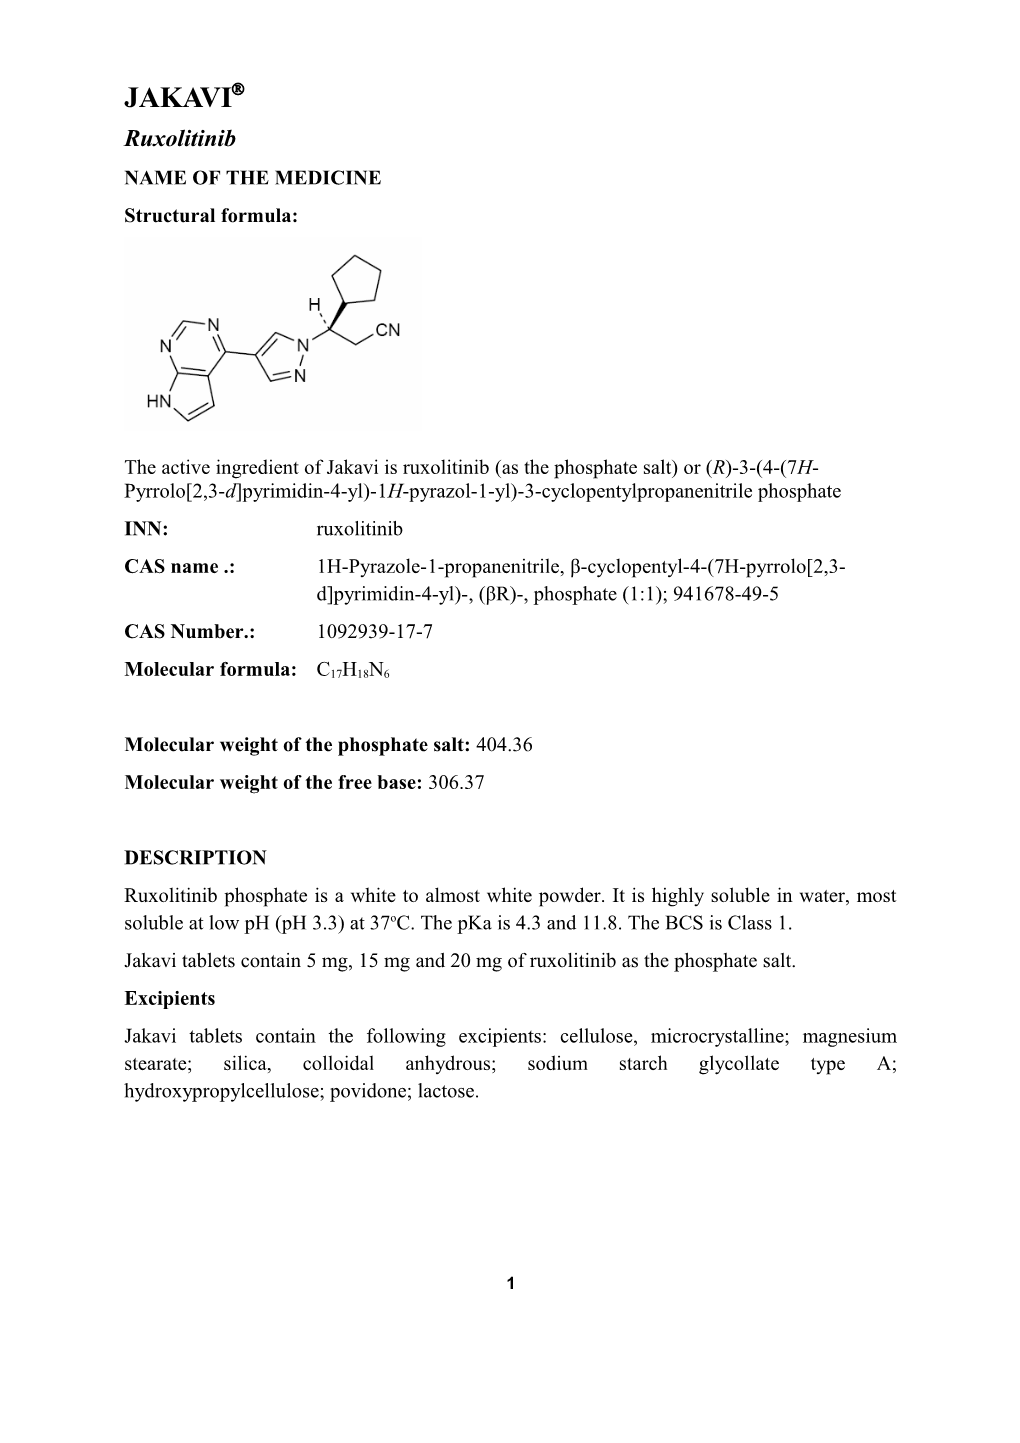 Attachment 1. Product Information for Ruxolitinib